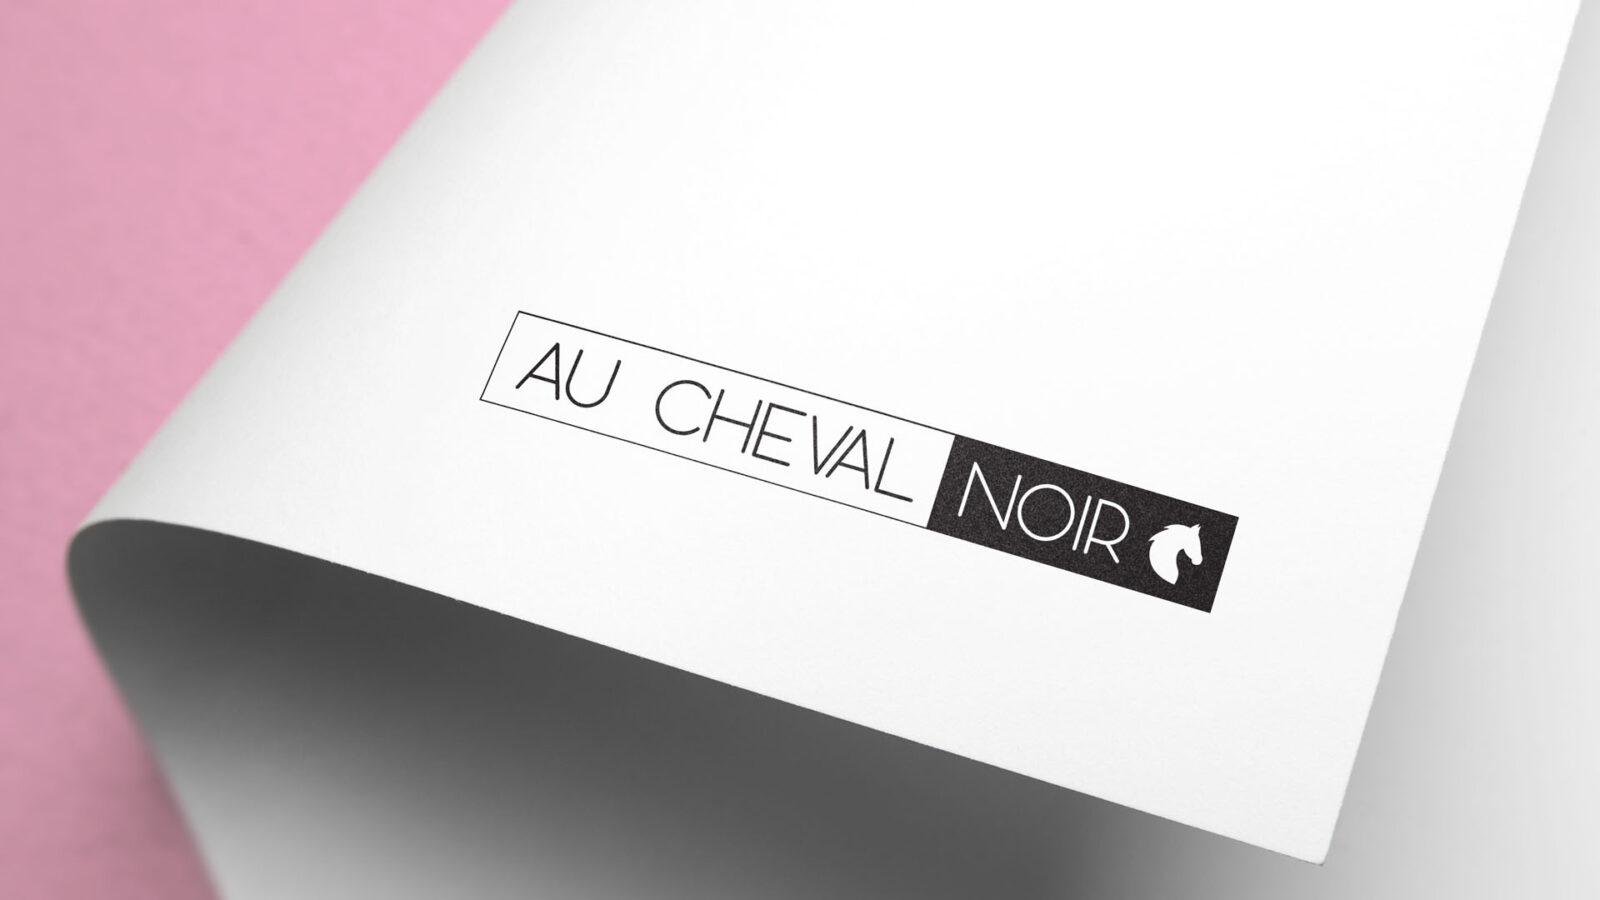 restaurant cheval noir mocku logo 1600x900 - Au Cheval Noir